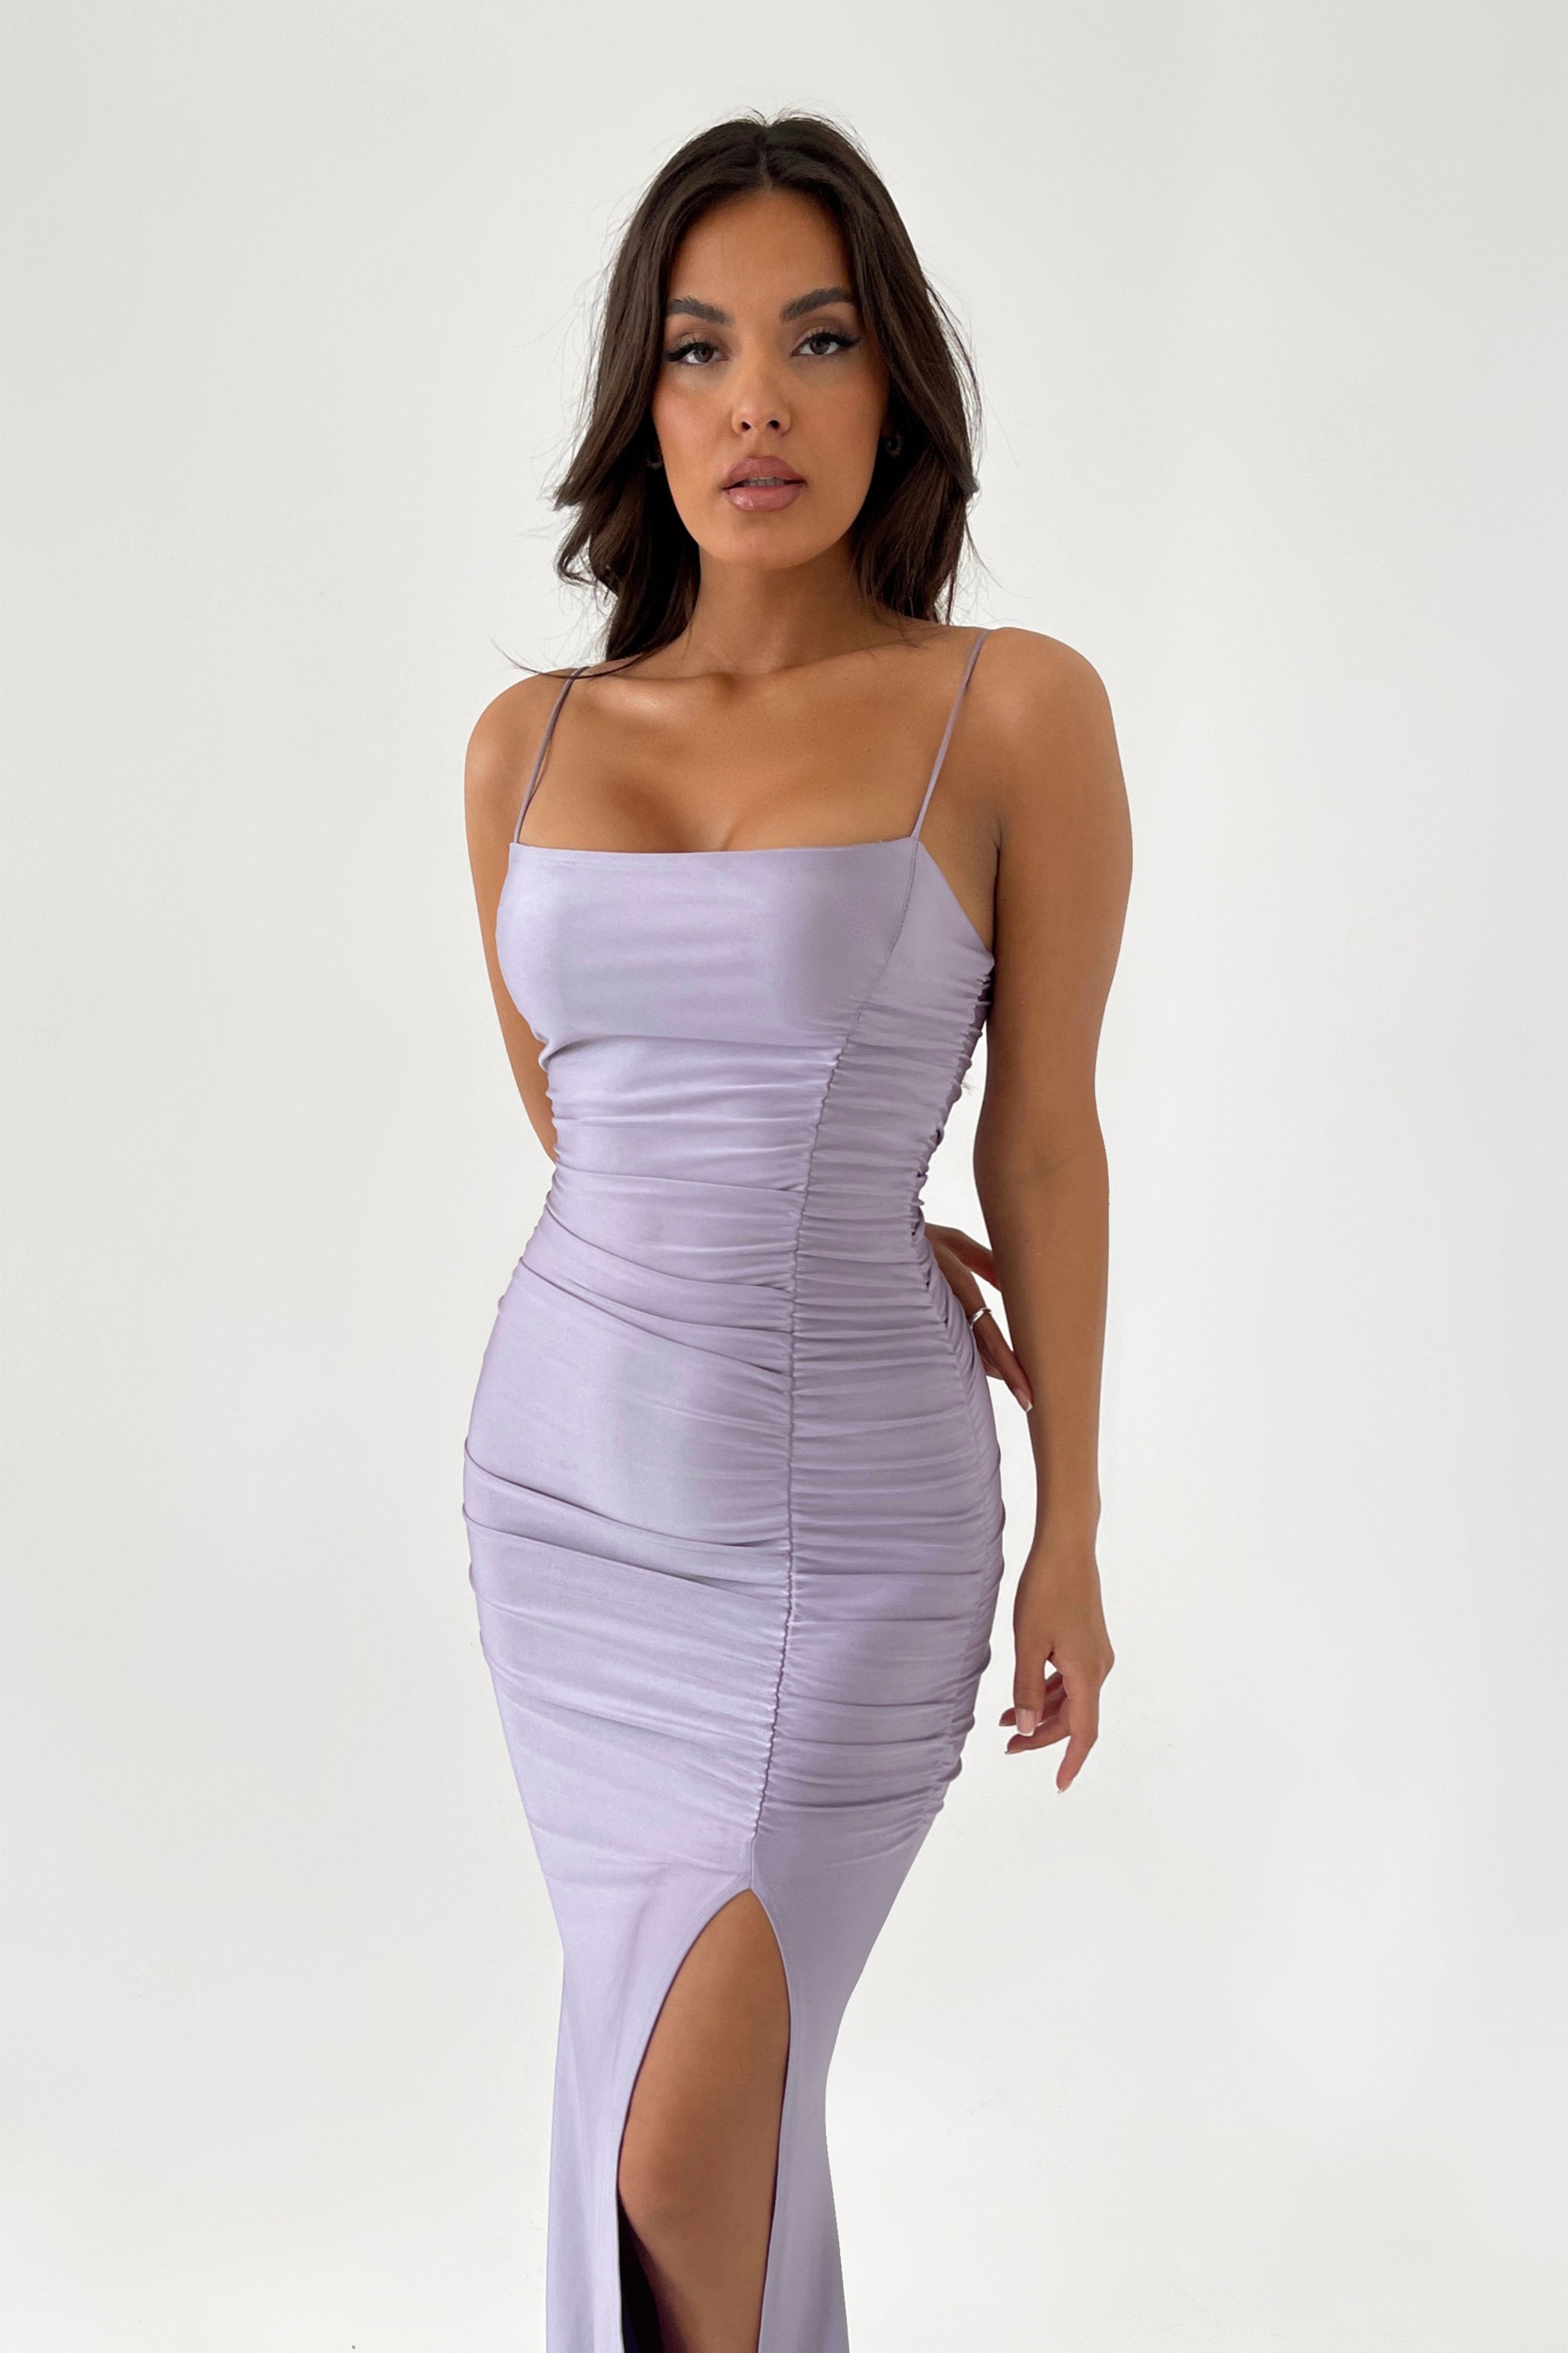 Zeira Lavender Dress